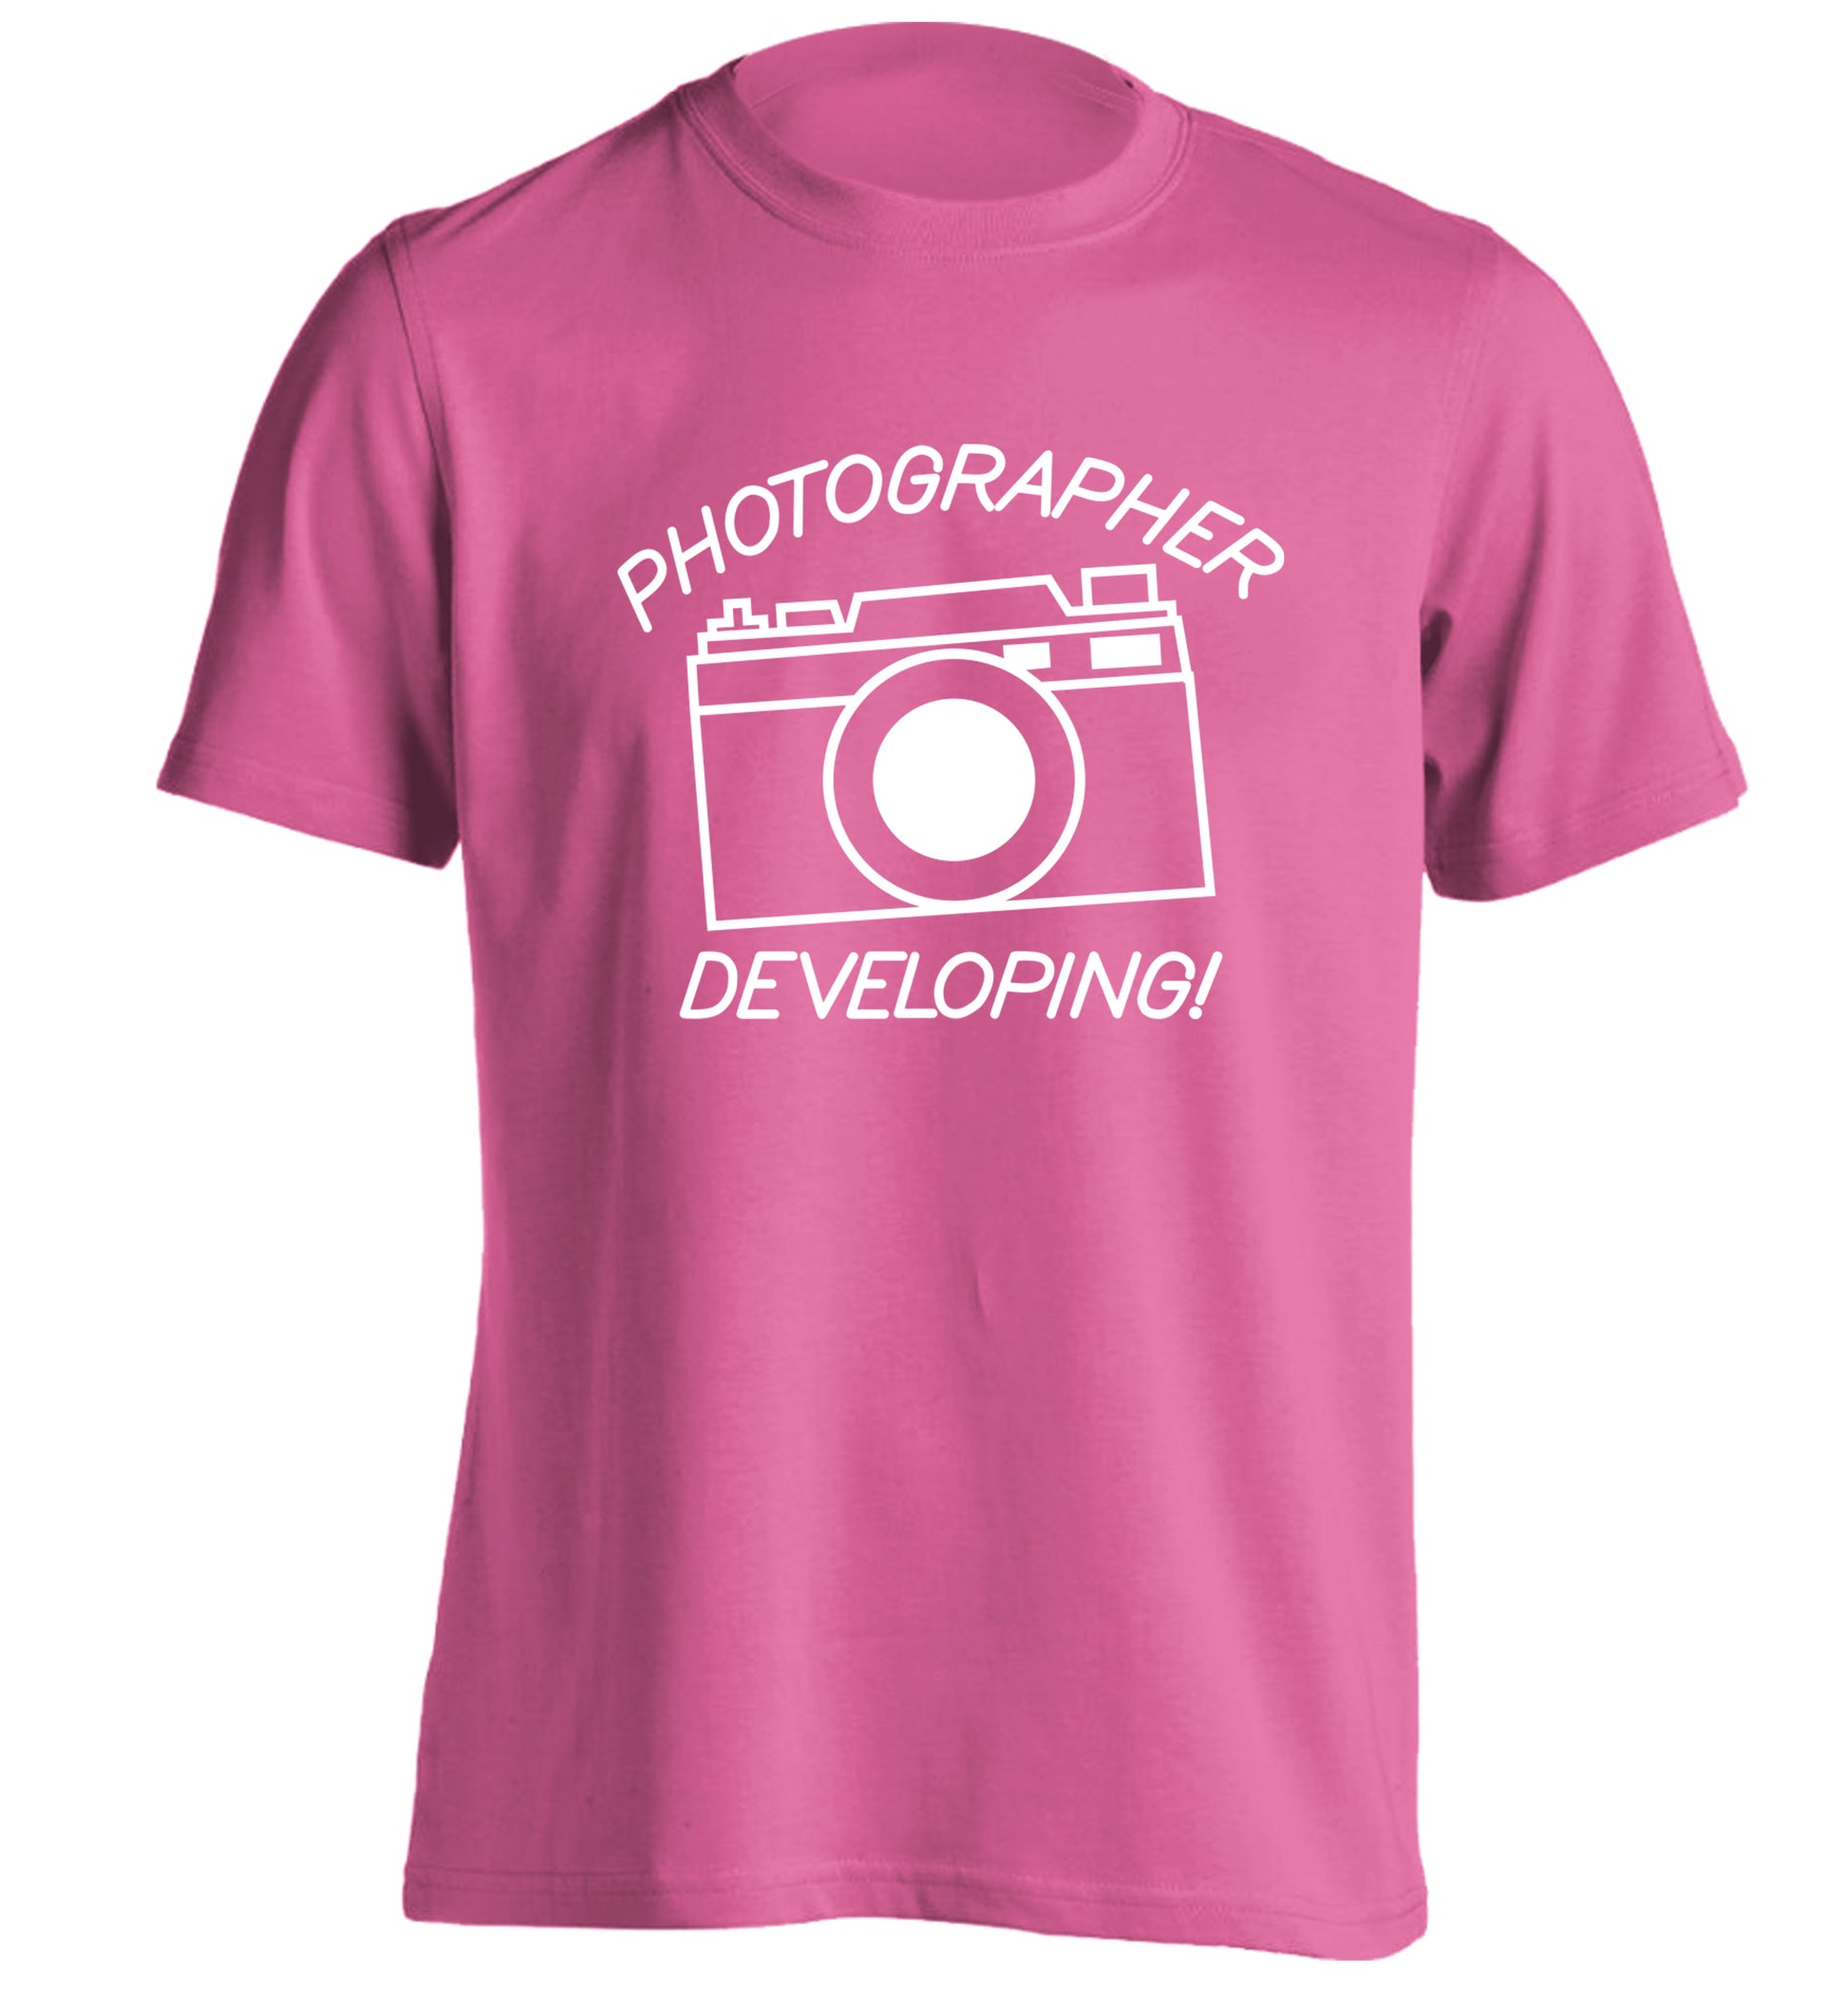 Photographer Developing  adults unisex pink Tshirt 2XL